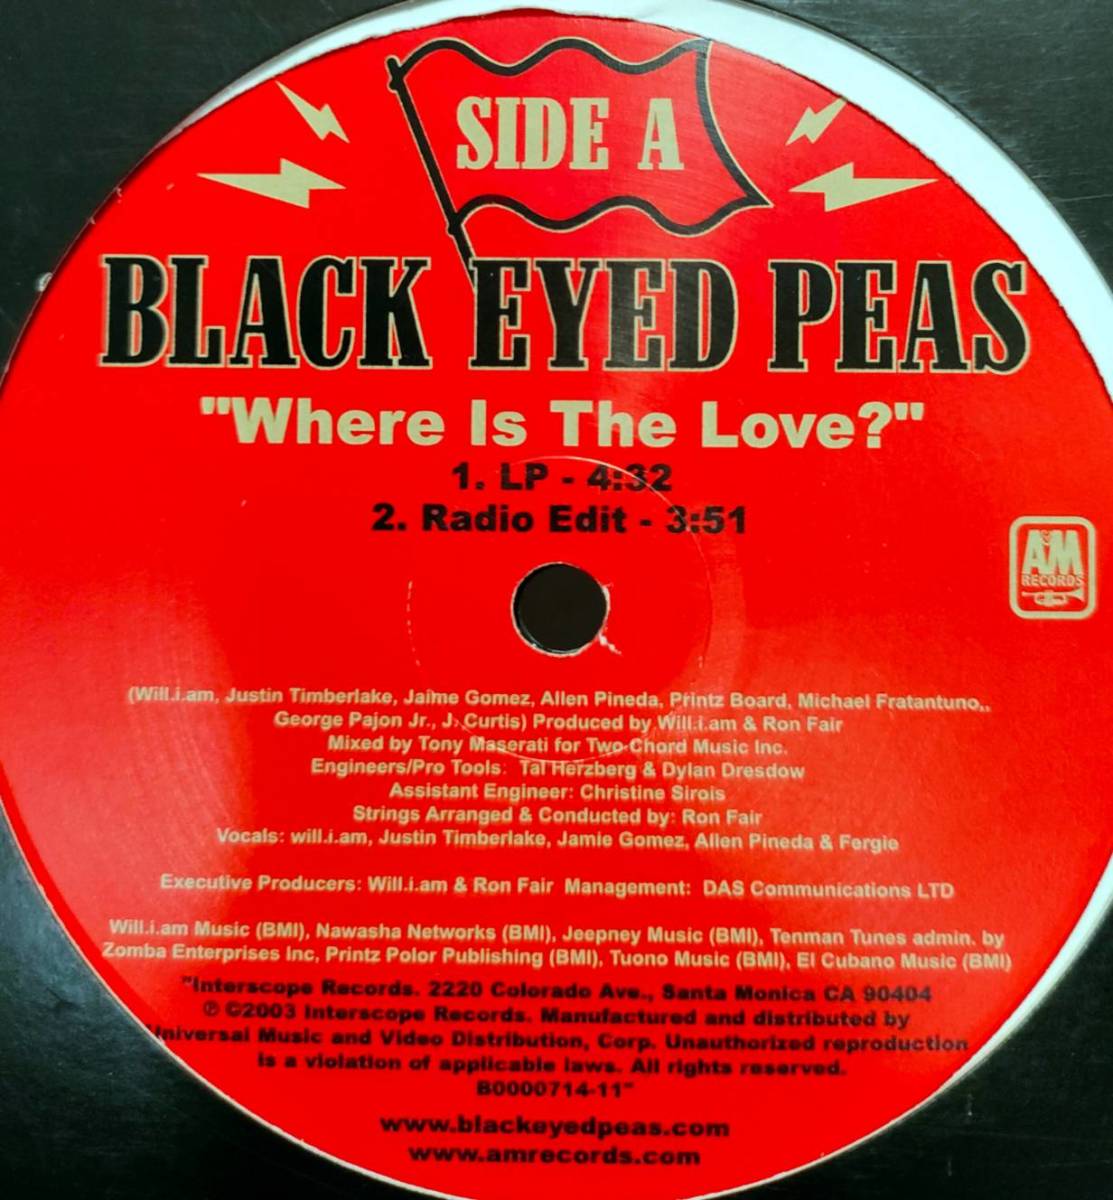 US ORIGINAL盤 ★ BLACK EYED PEAS / WHERE IS THE LOVE? ☆_画像2